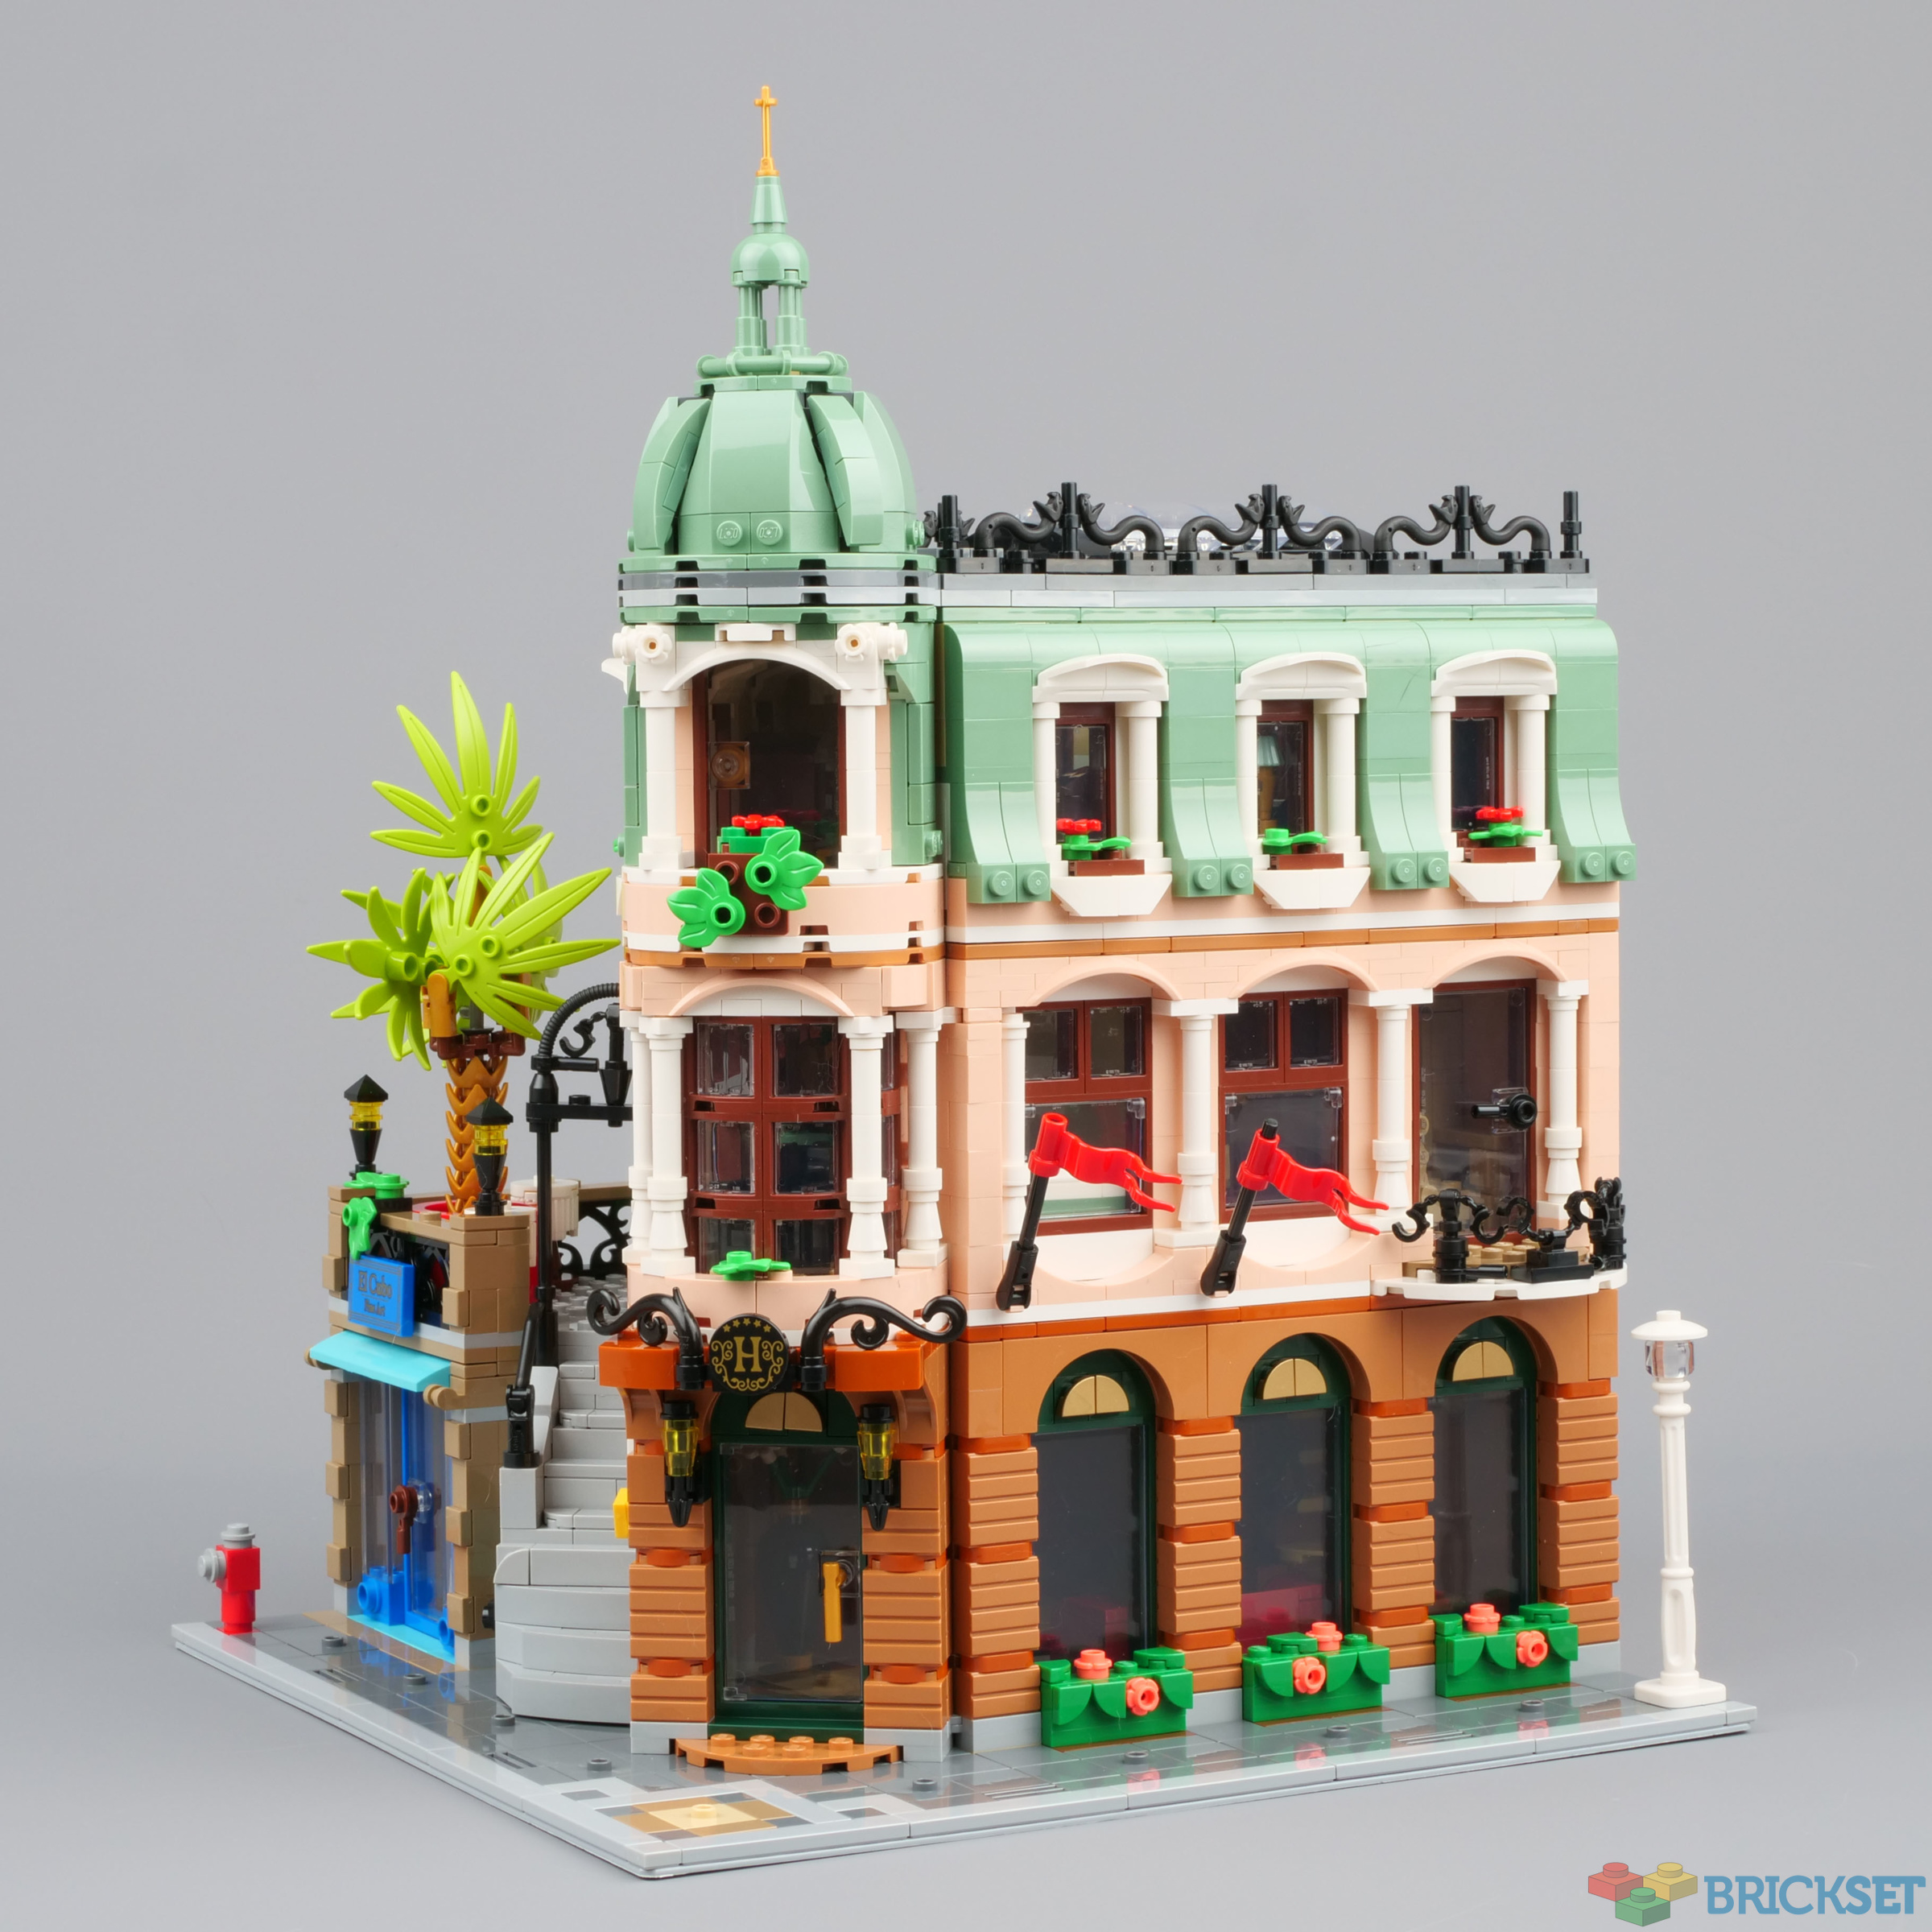 LEGO 10297 Boutique Hotel review | Brickset